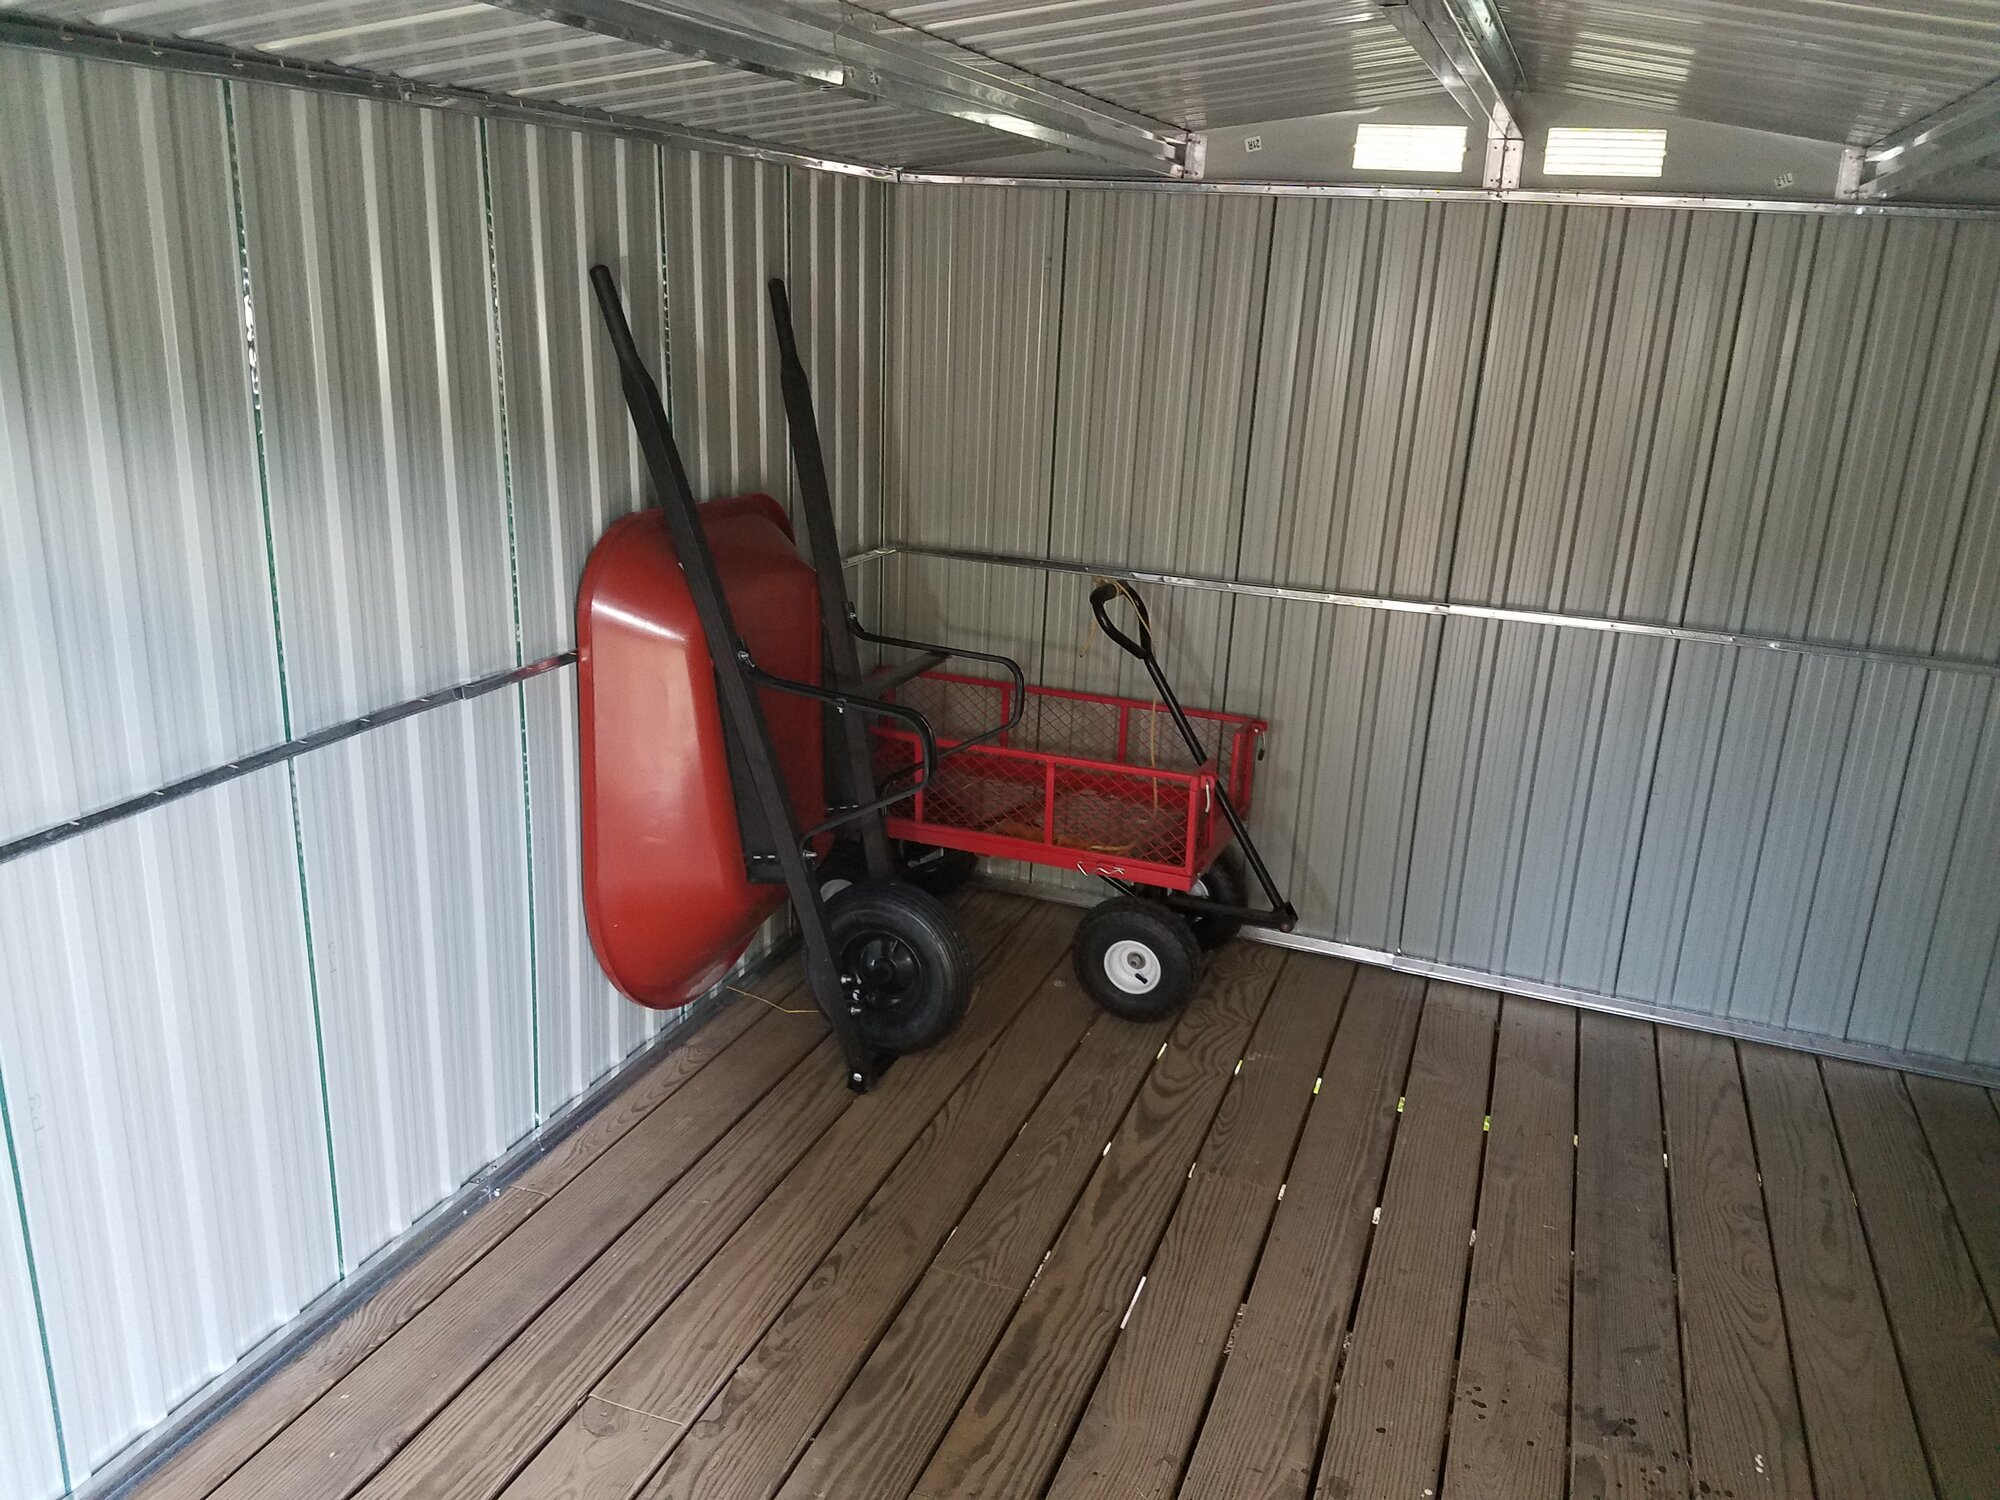 Wheelbarrow and Garden cart inside